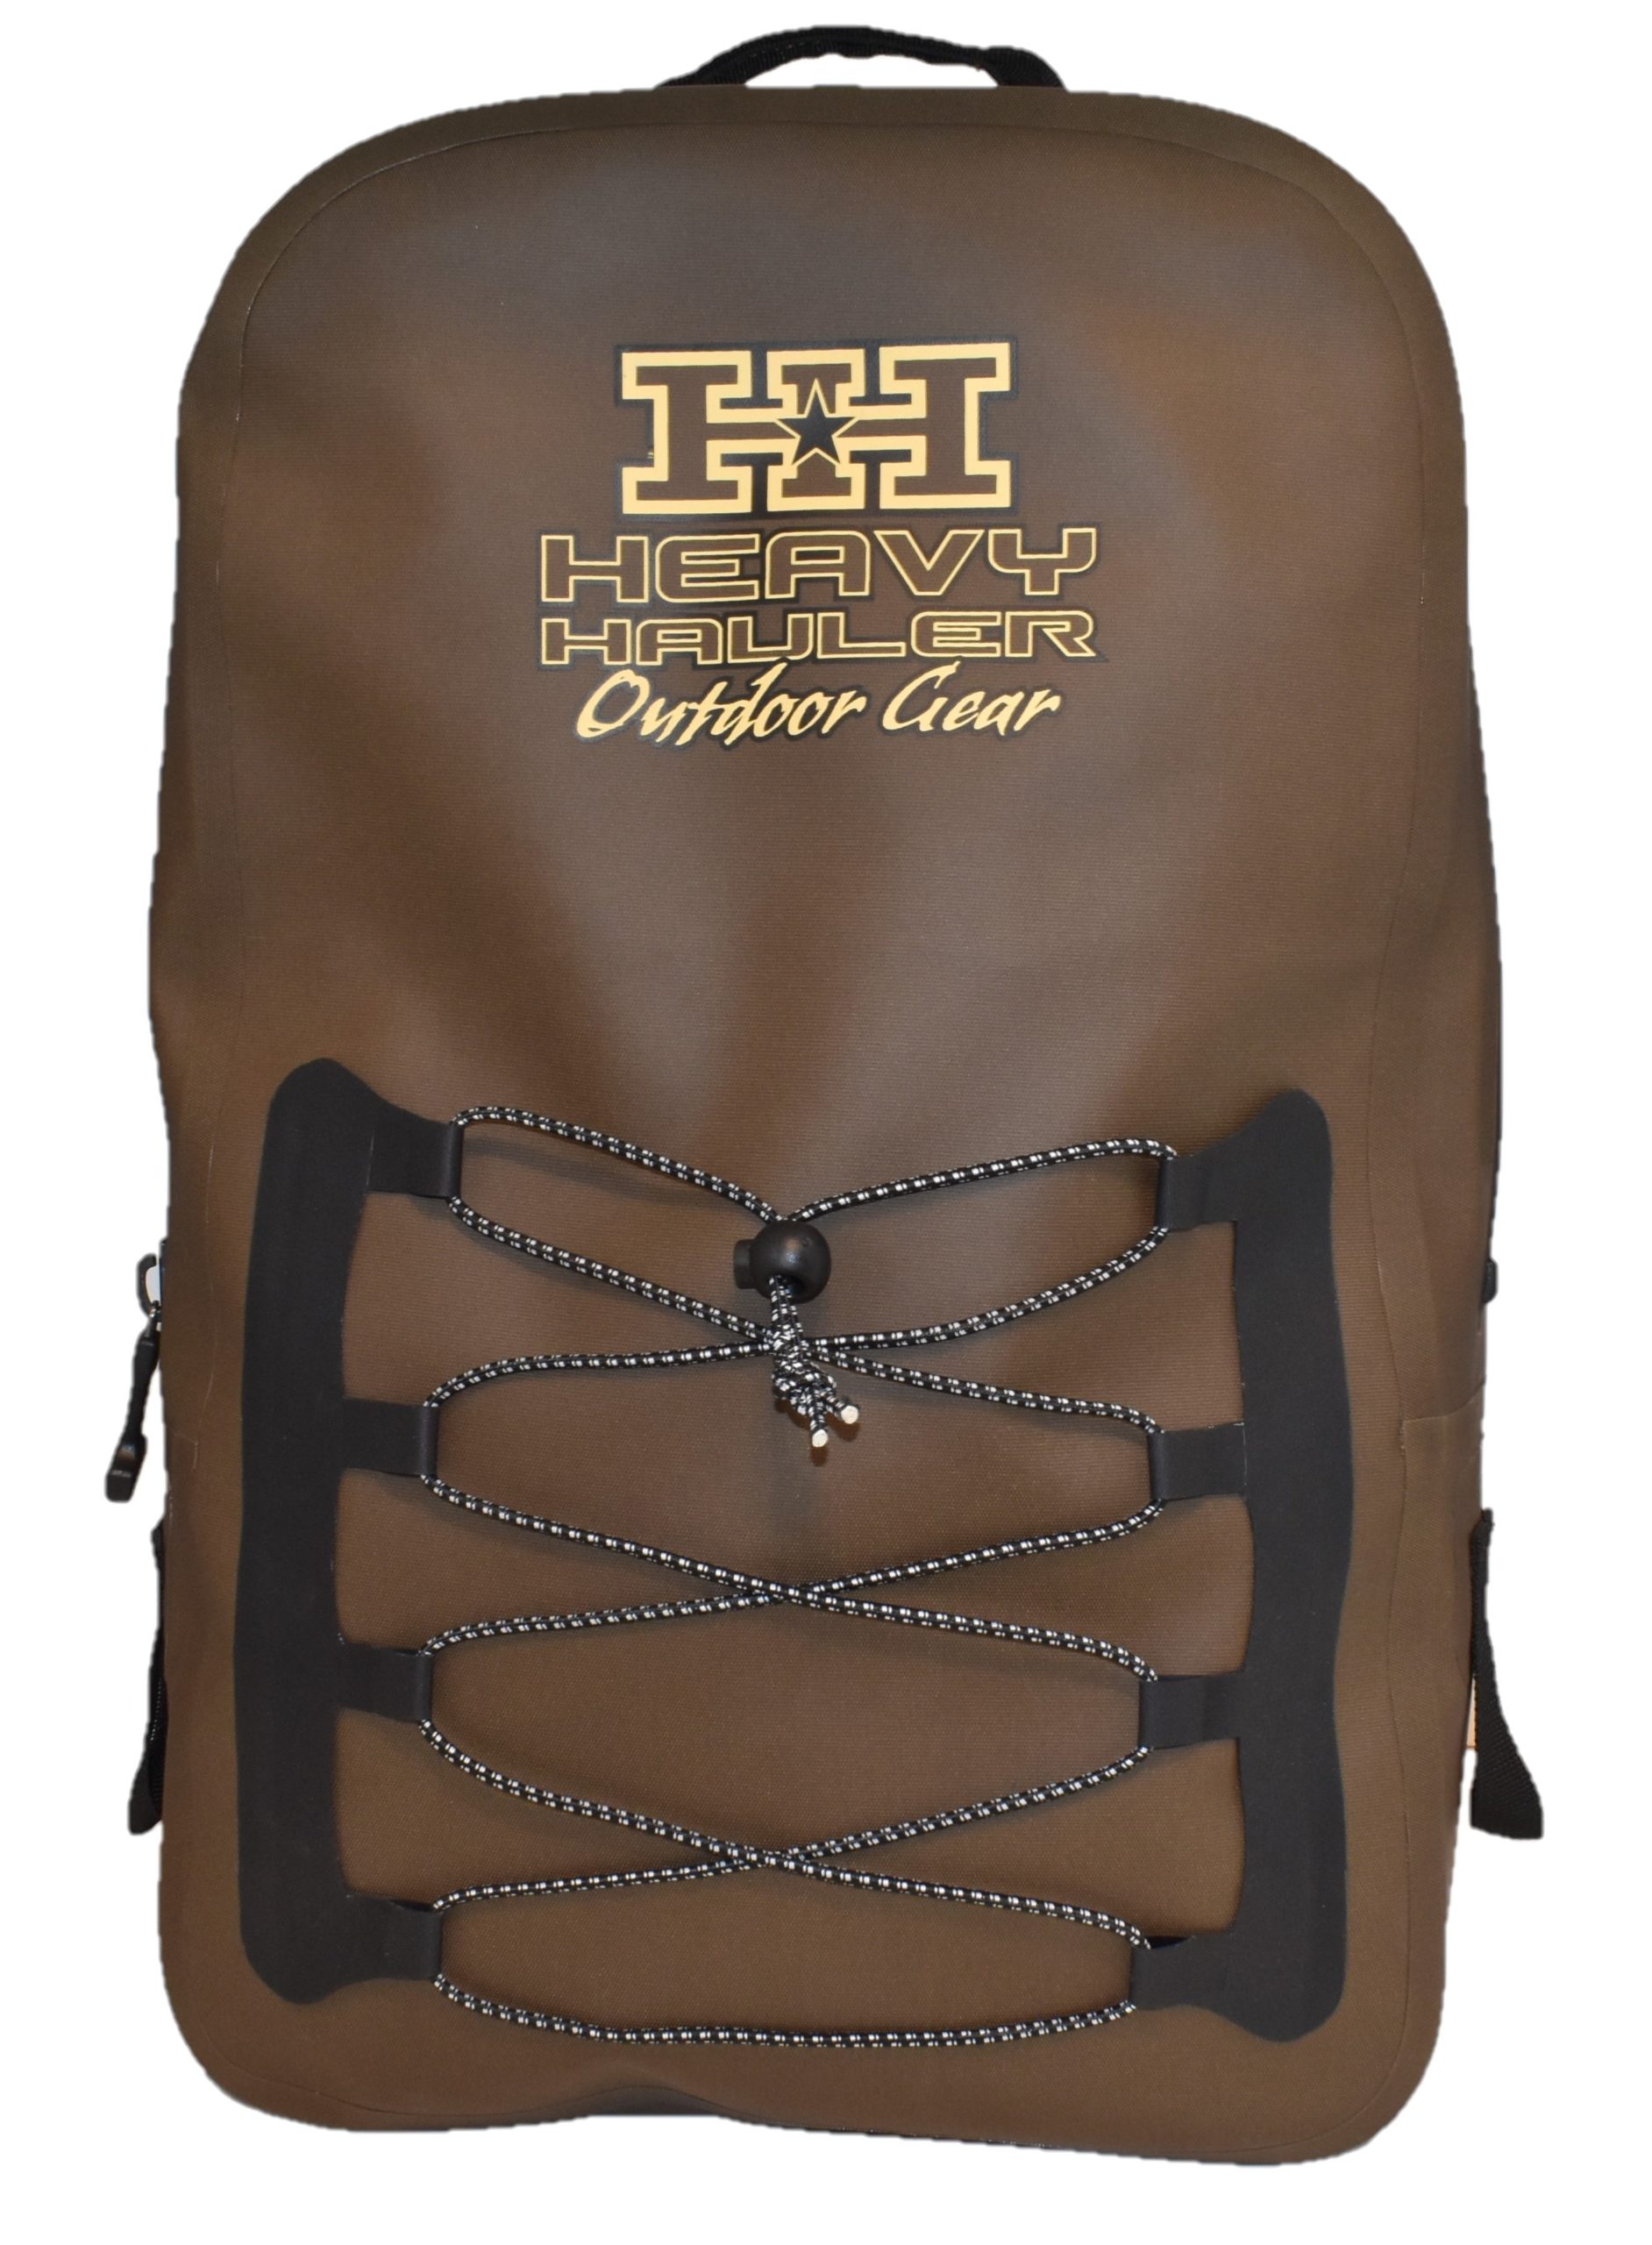 Waterproof Backpack Backpack, Waterproof Waterproof Bag